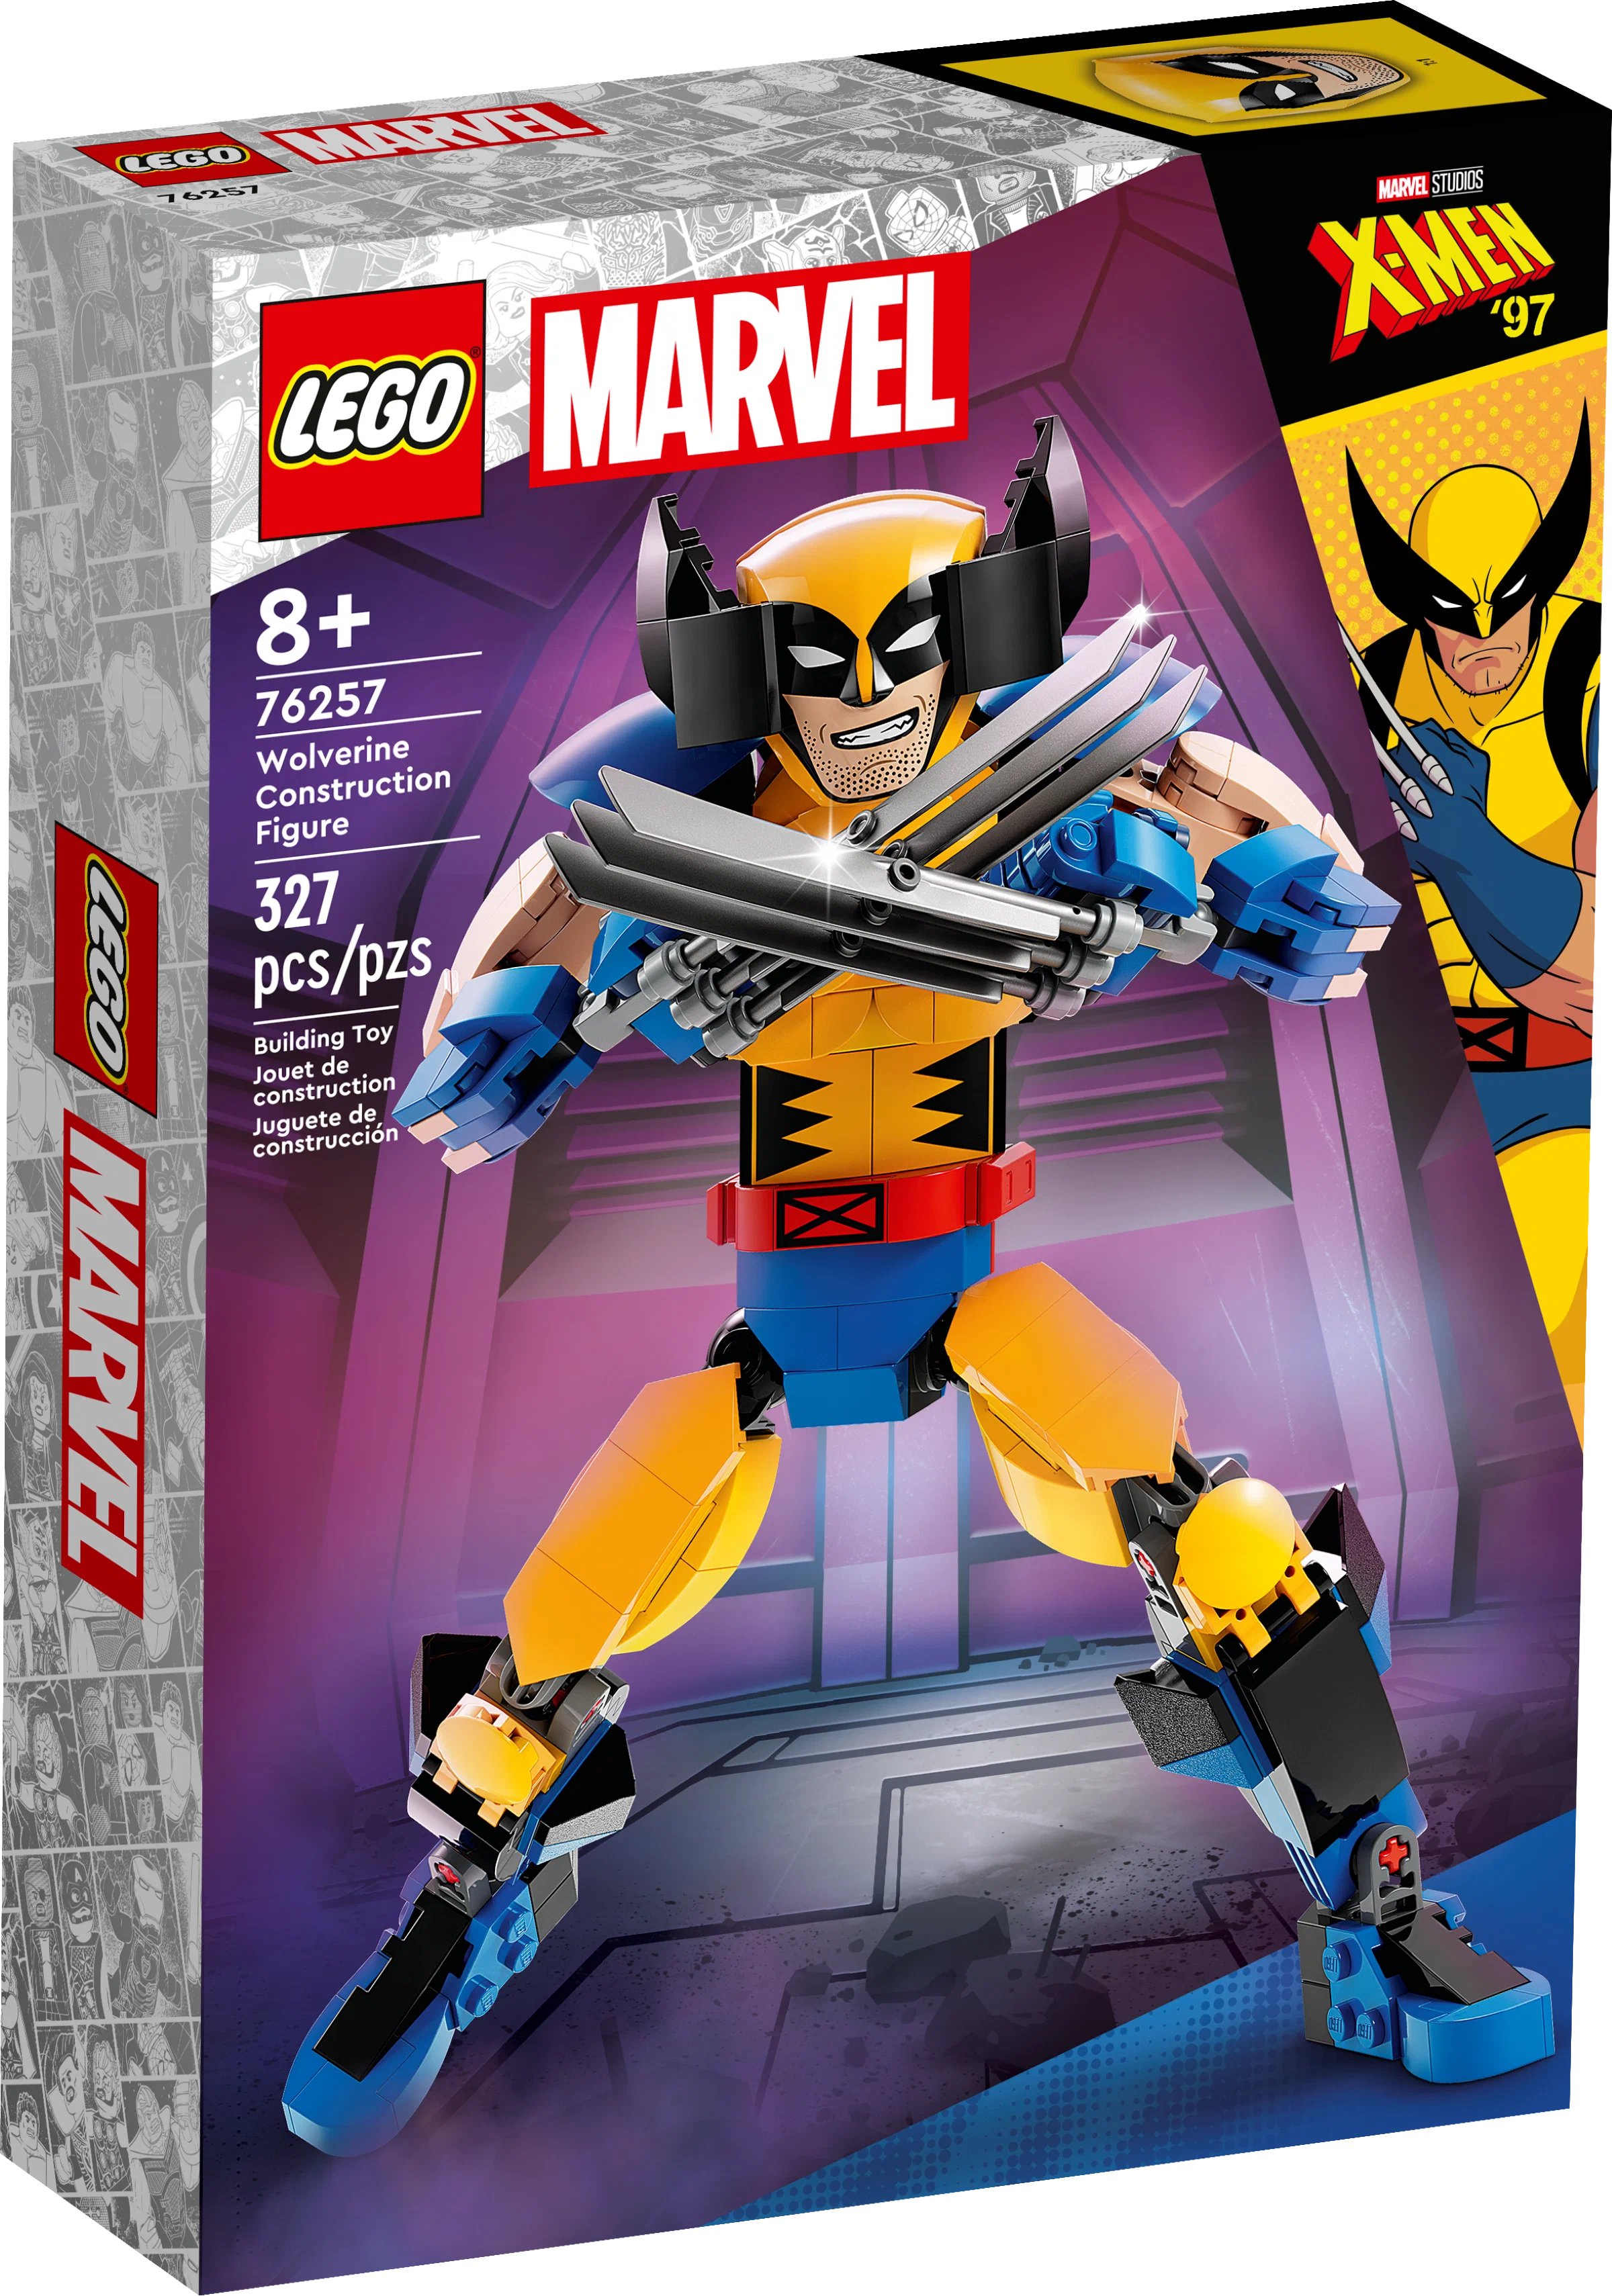 Конструктор Lego Marvel Wolverine Figure 76257, 327 деталей конструктор lego marvel wolverine figure 76257 327 деталей